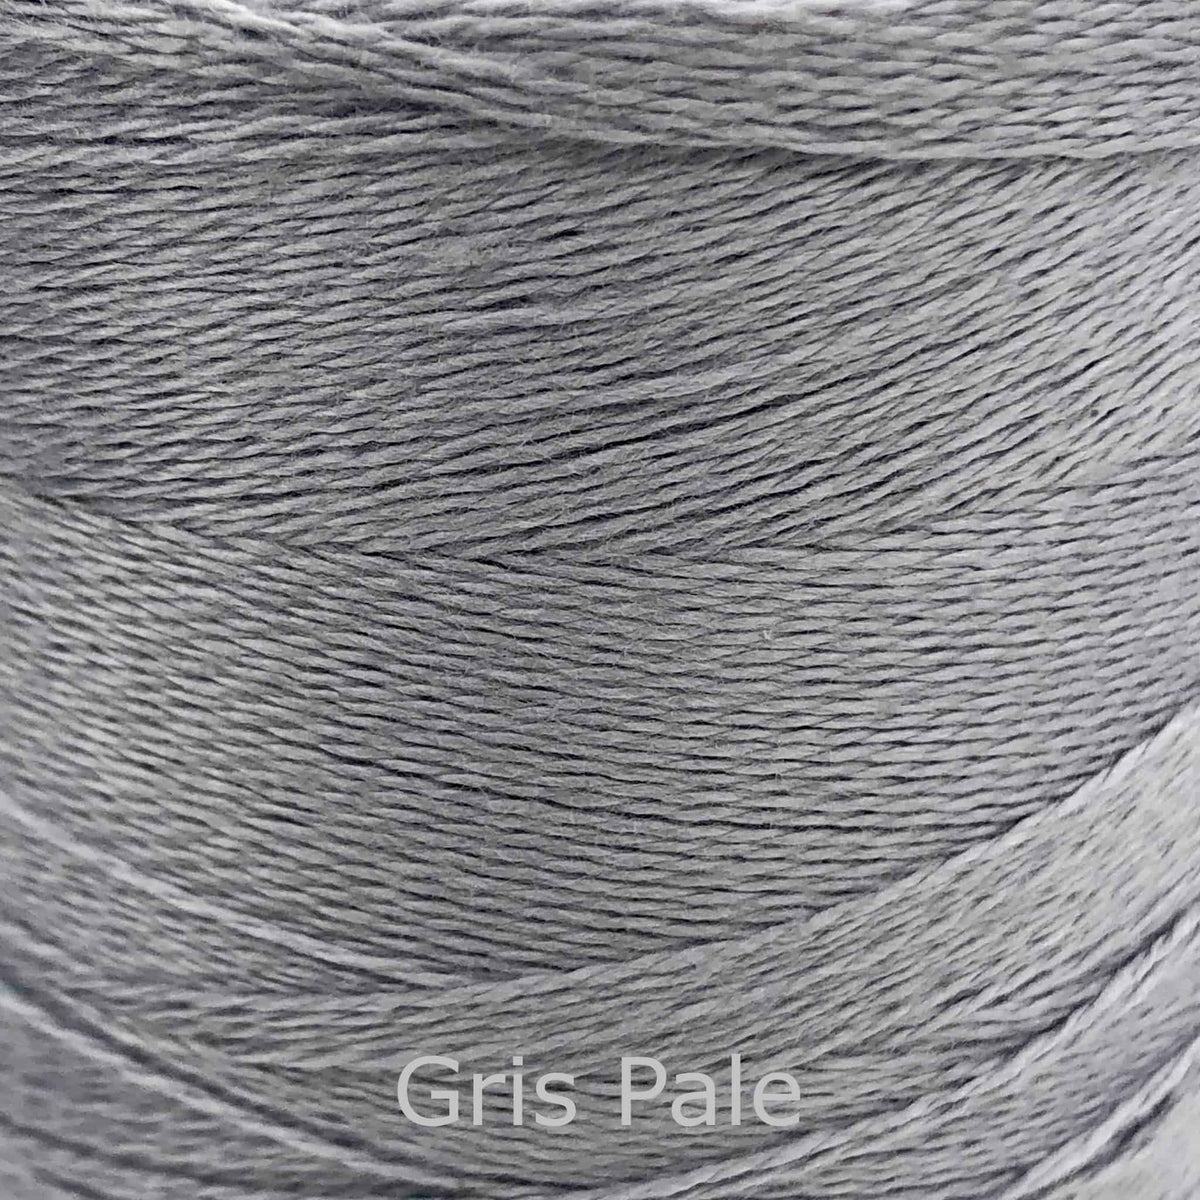 Maurice-Brassard-Bamboo-8/2-Weaving-yarn-gris-pale